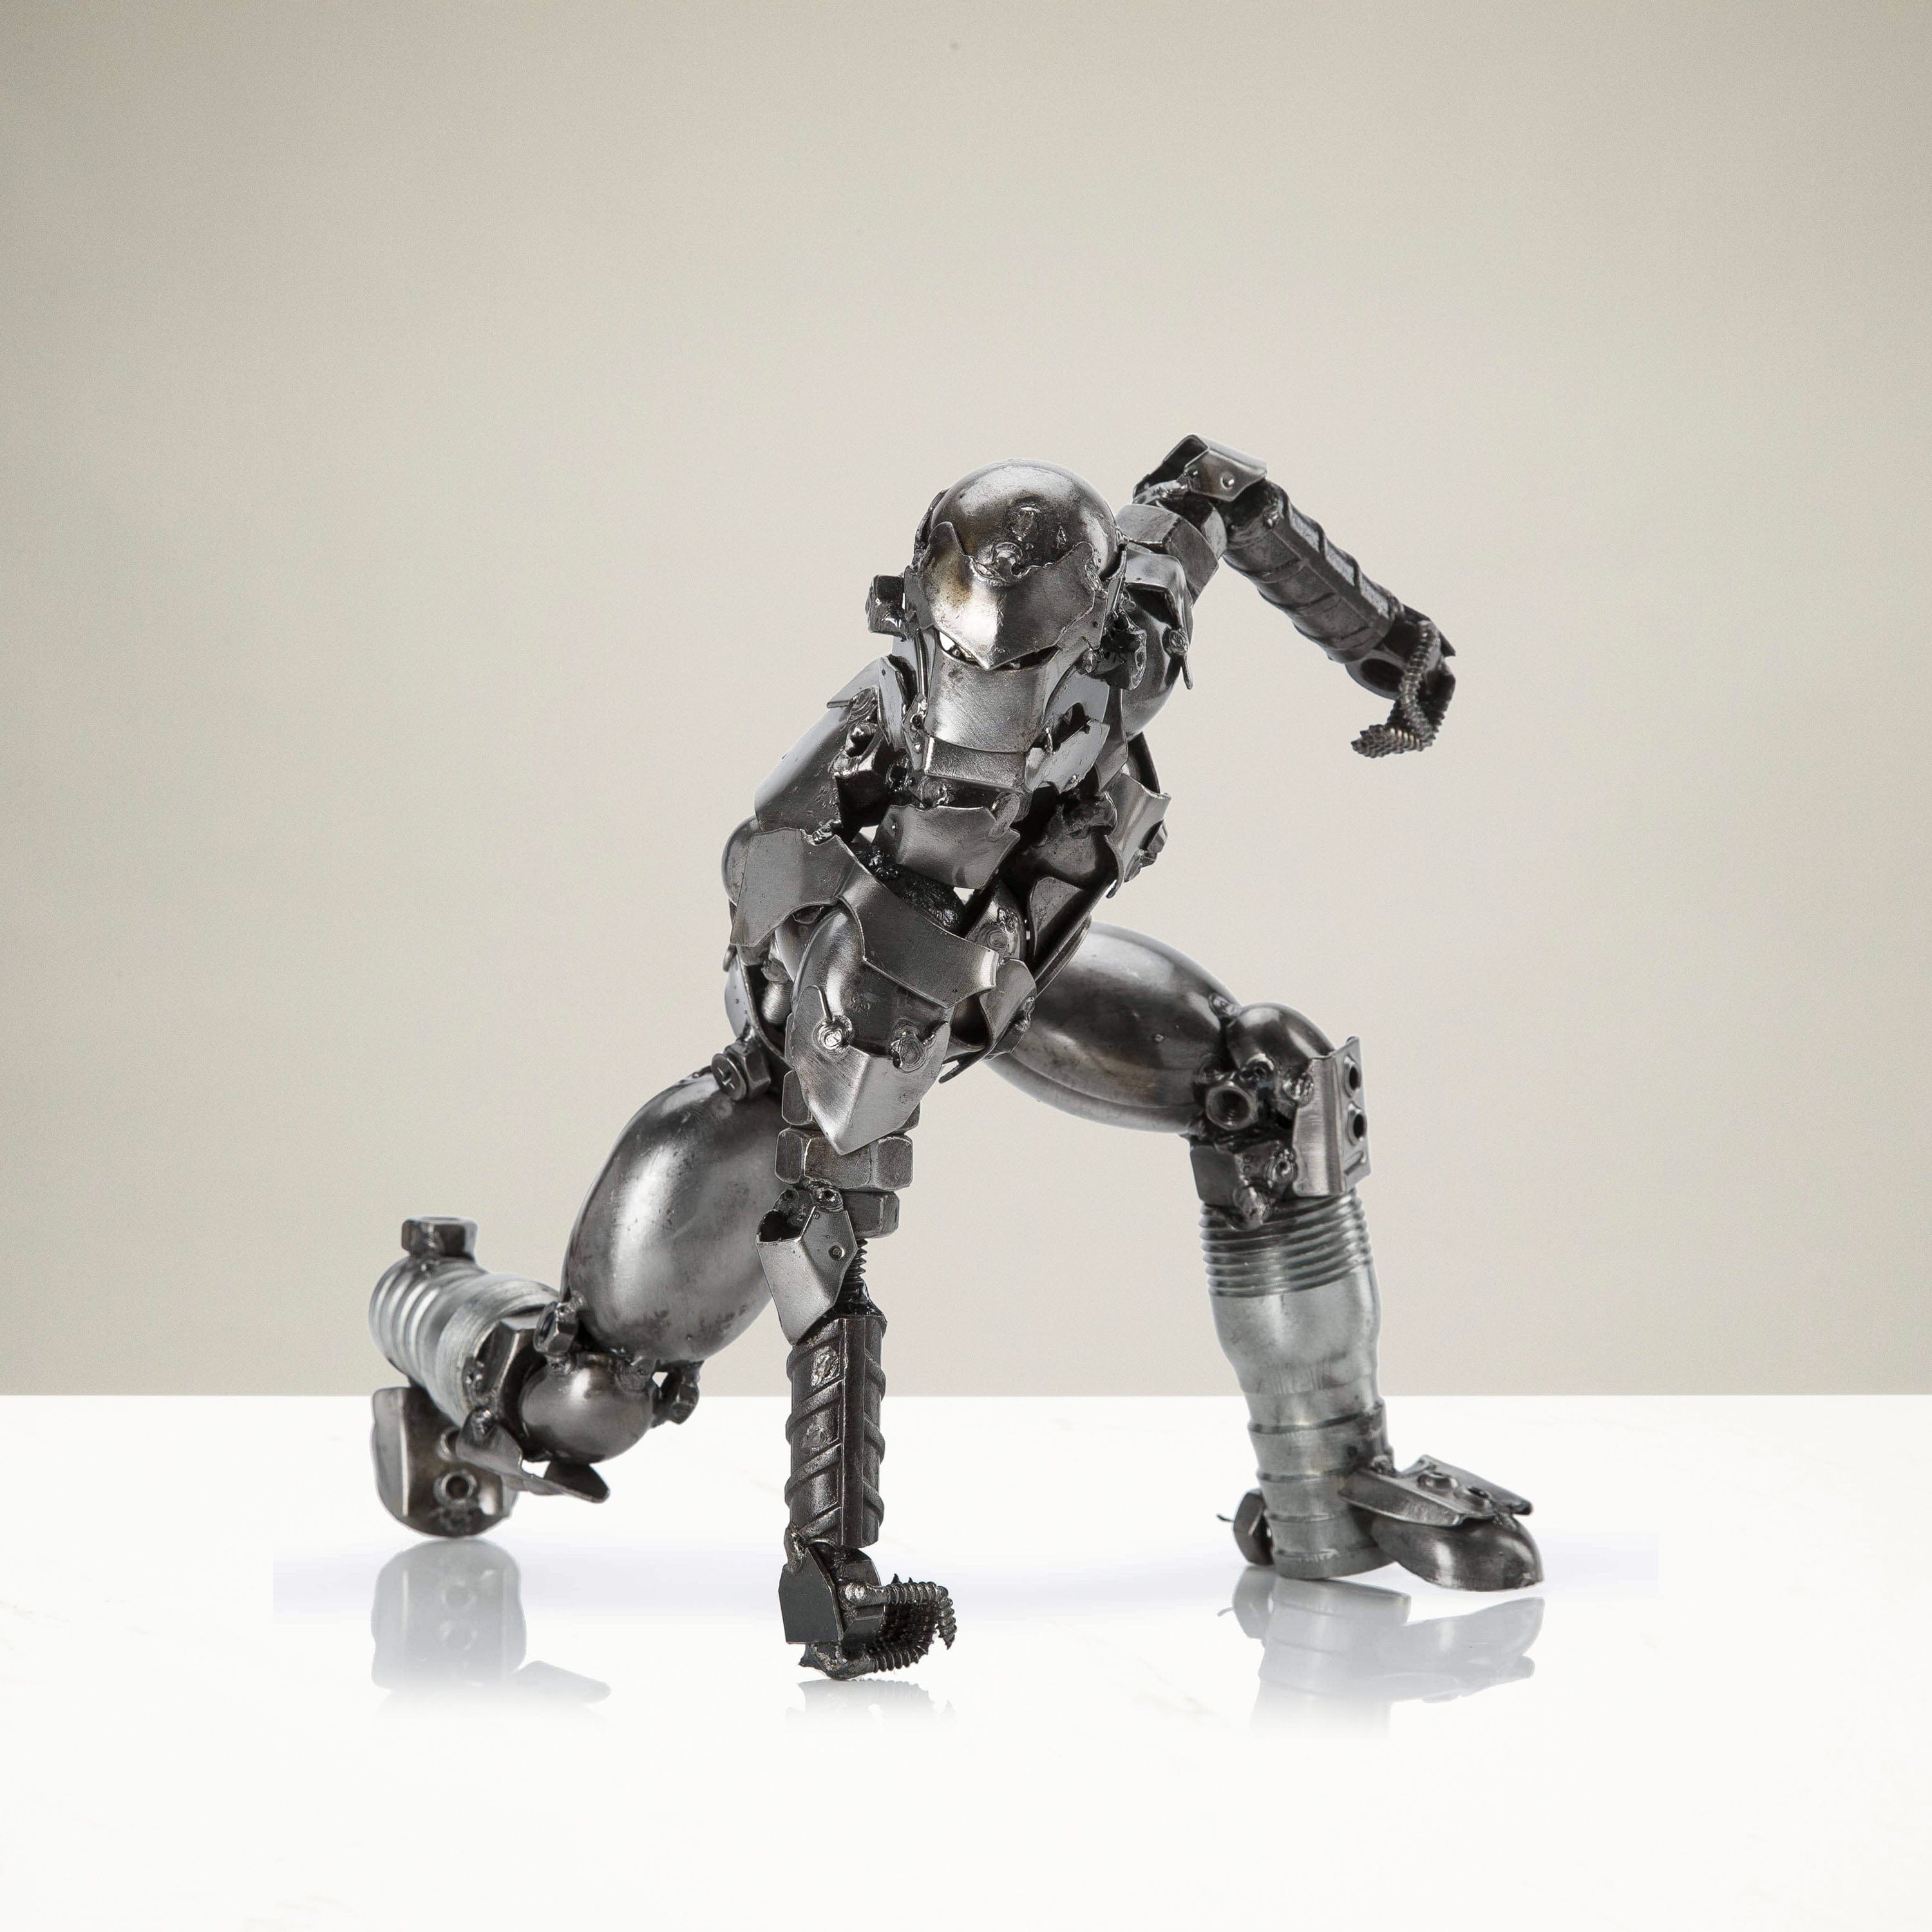 Kalifano Recycled Metal Art Iron Man Inspired Recycled Metal Sculpture RMS-700IMB-N